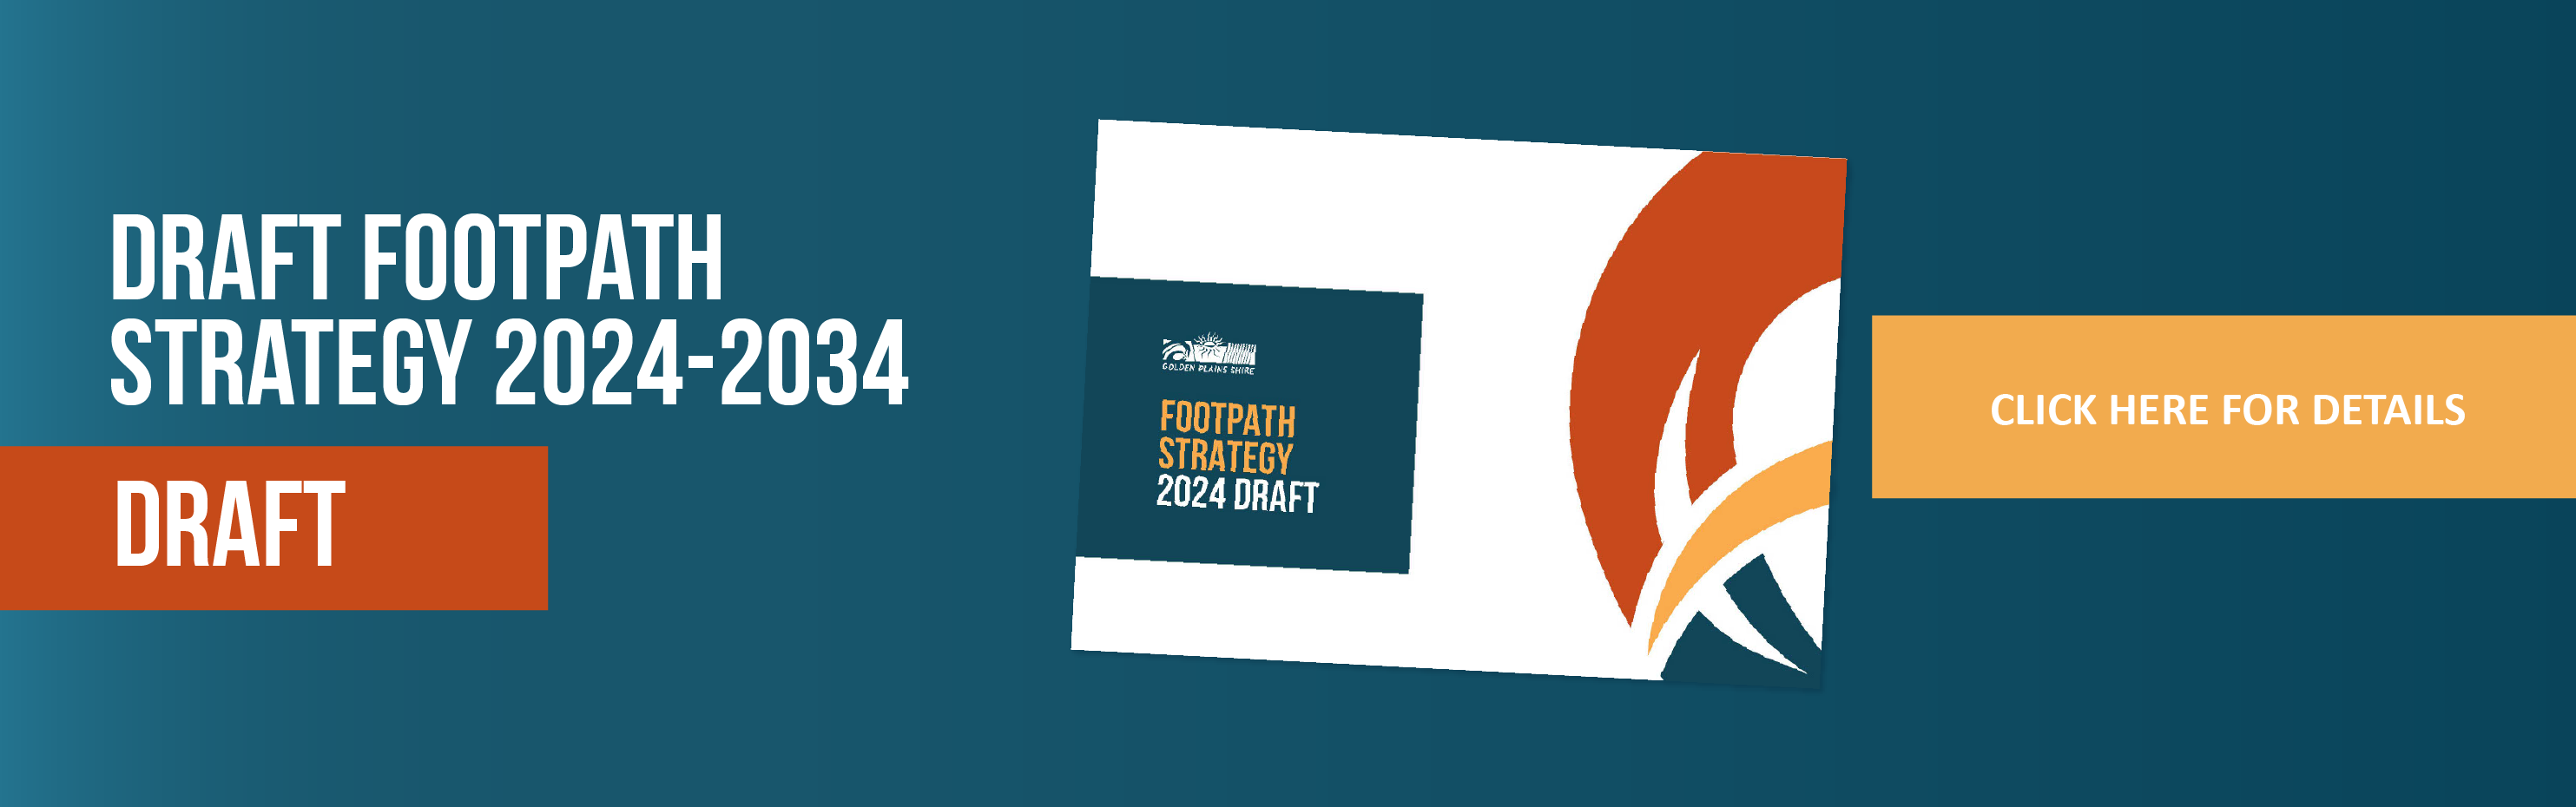 Draft Footpath Strategy banner